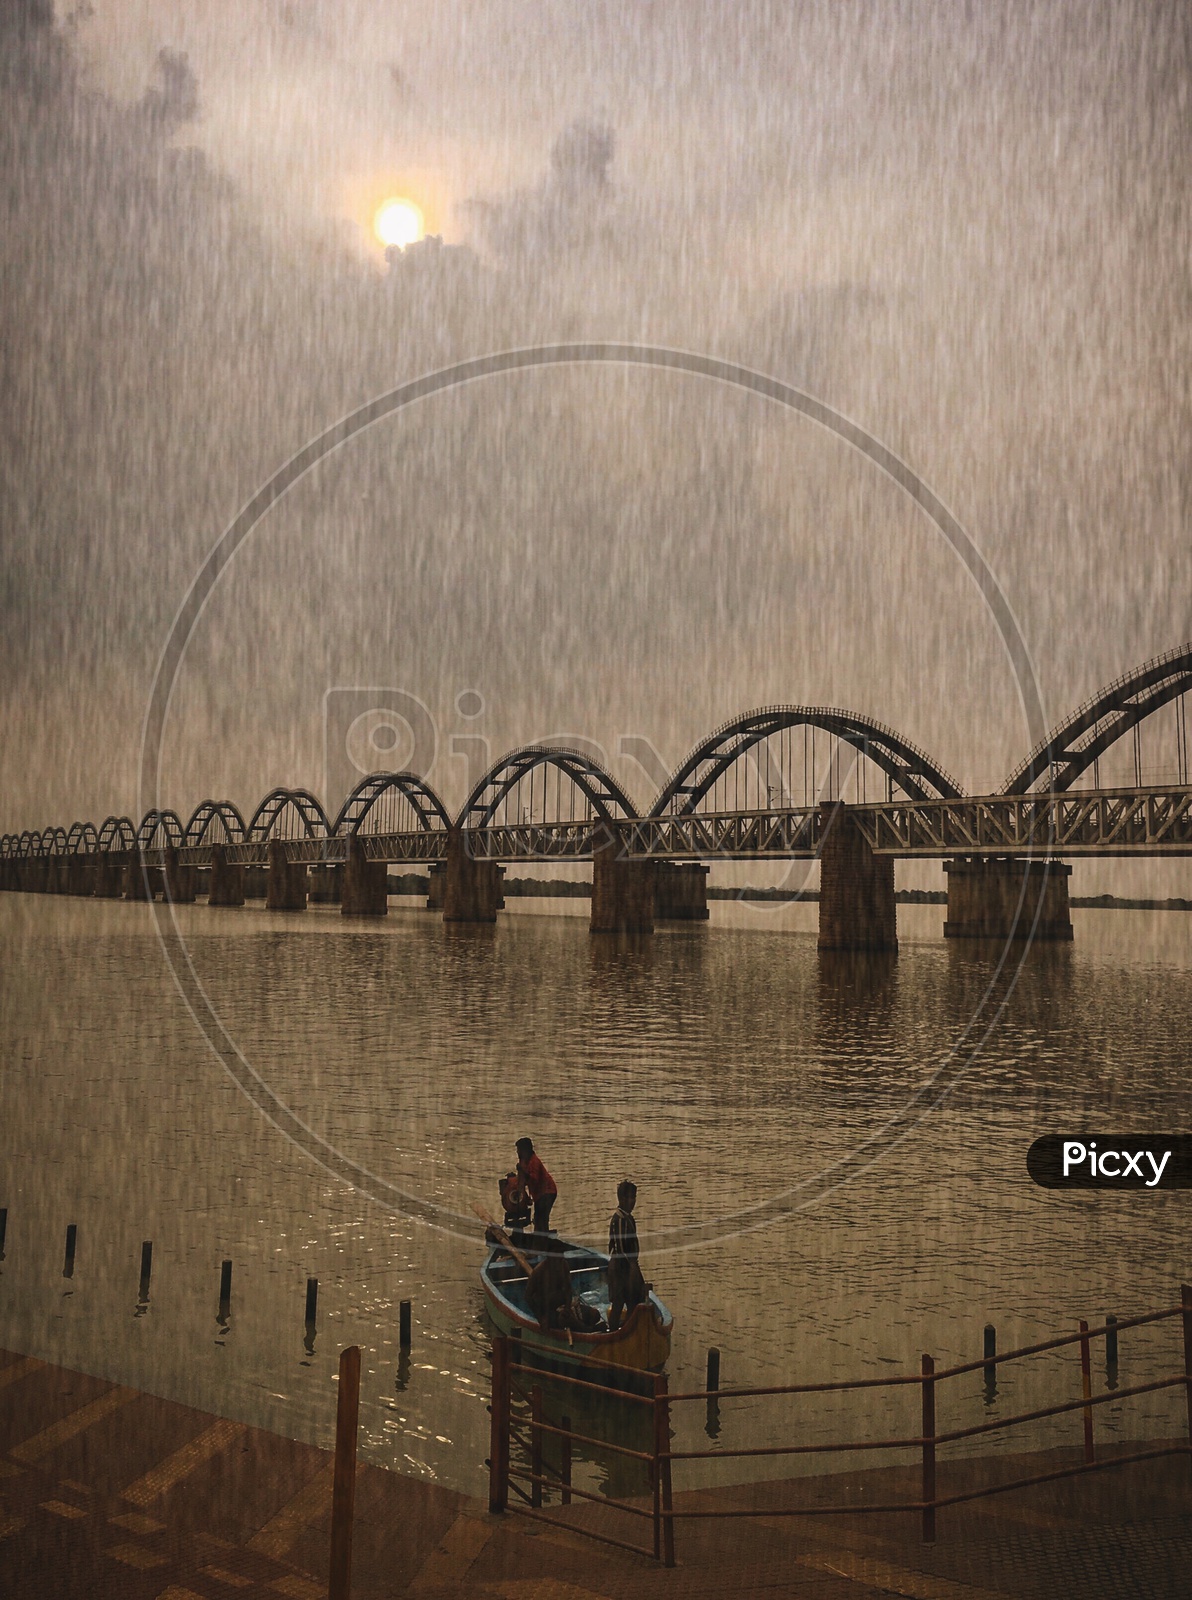 Godavari Bridge during bipolar weather